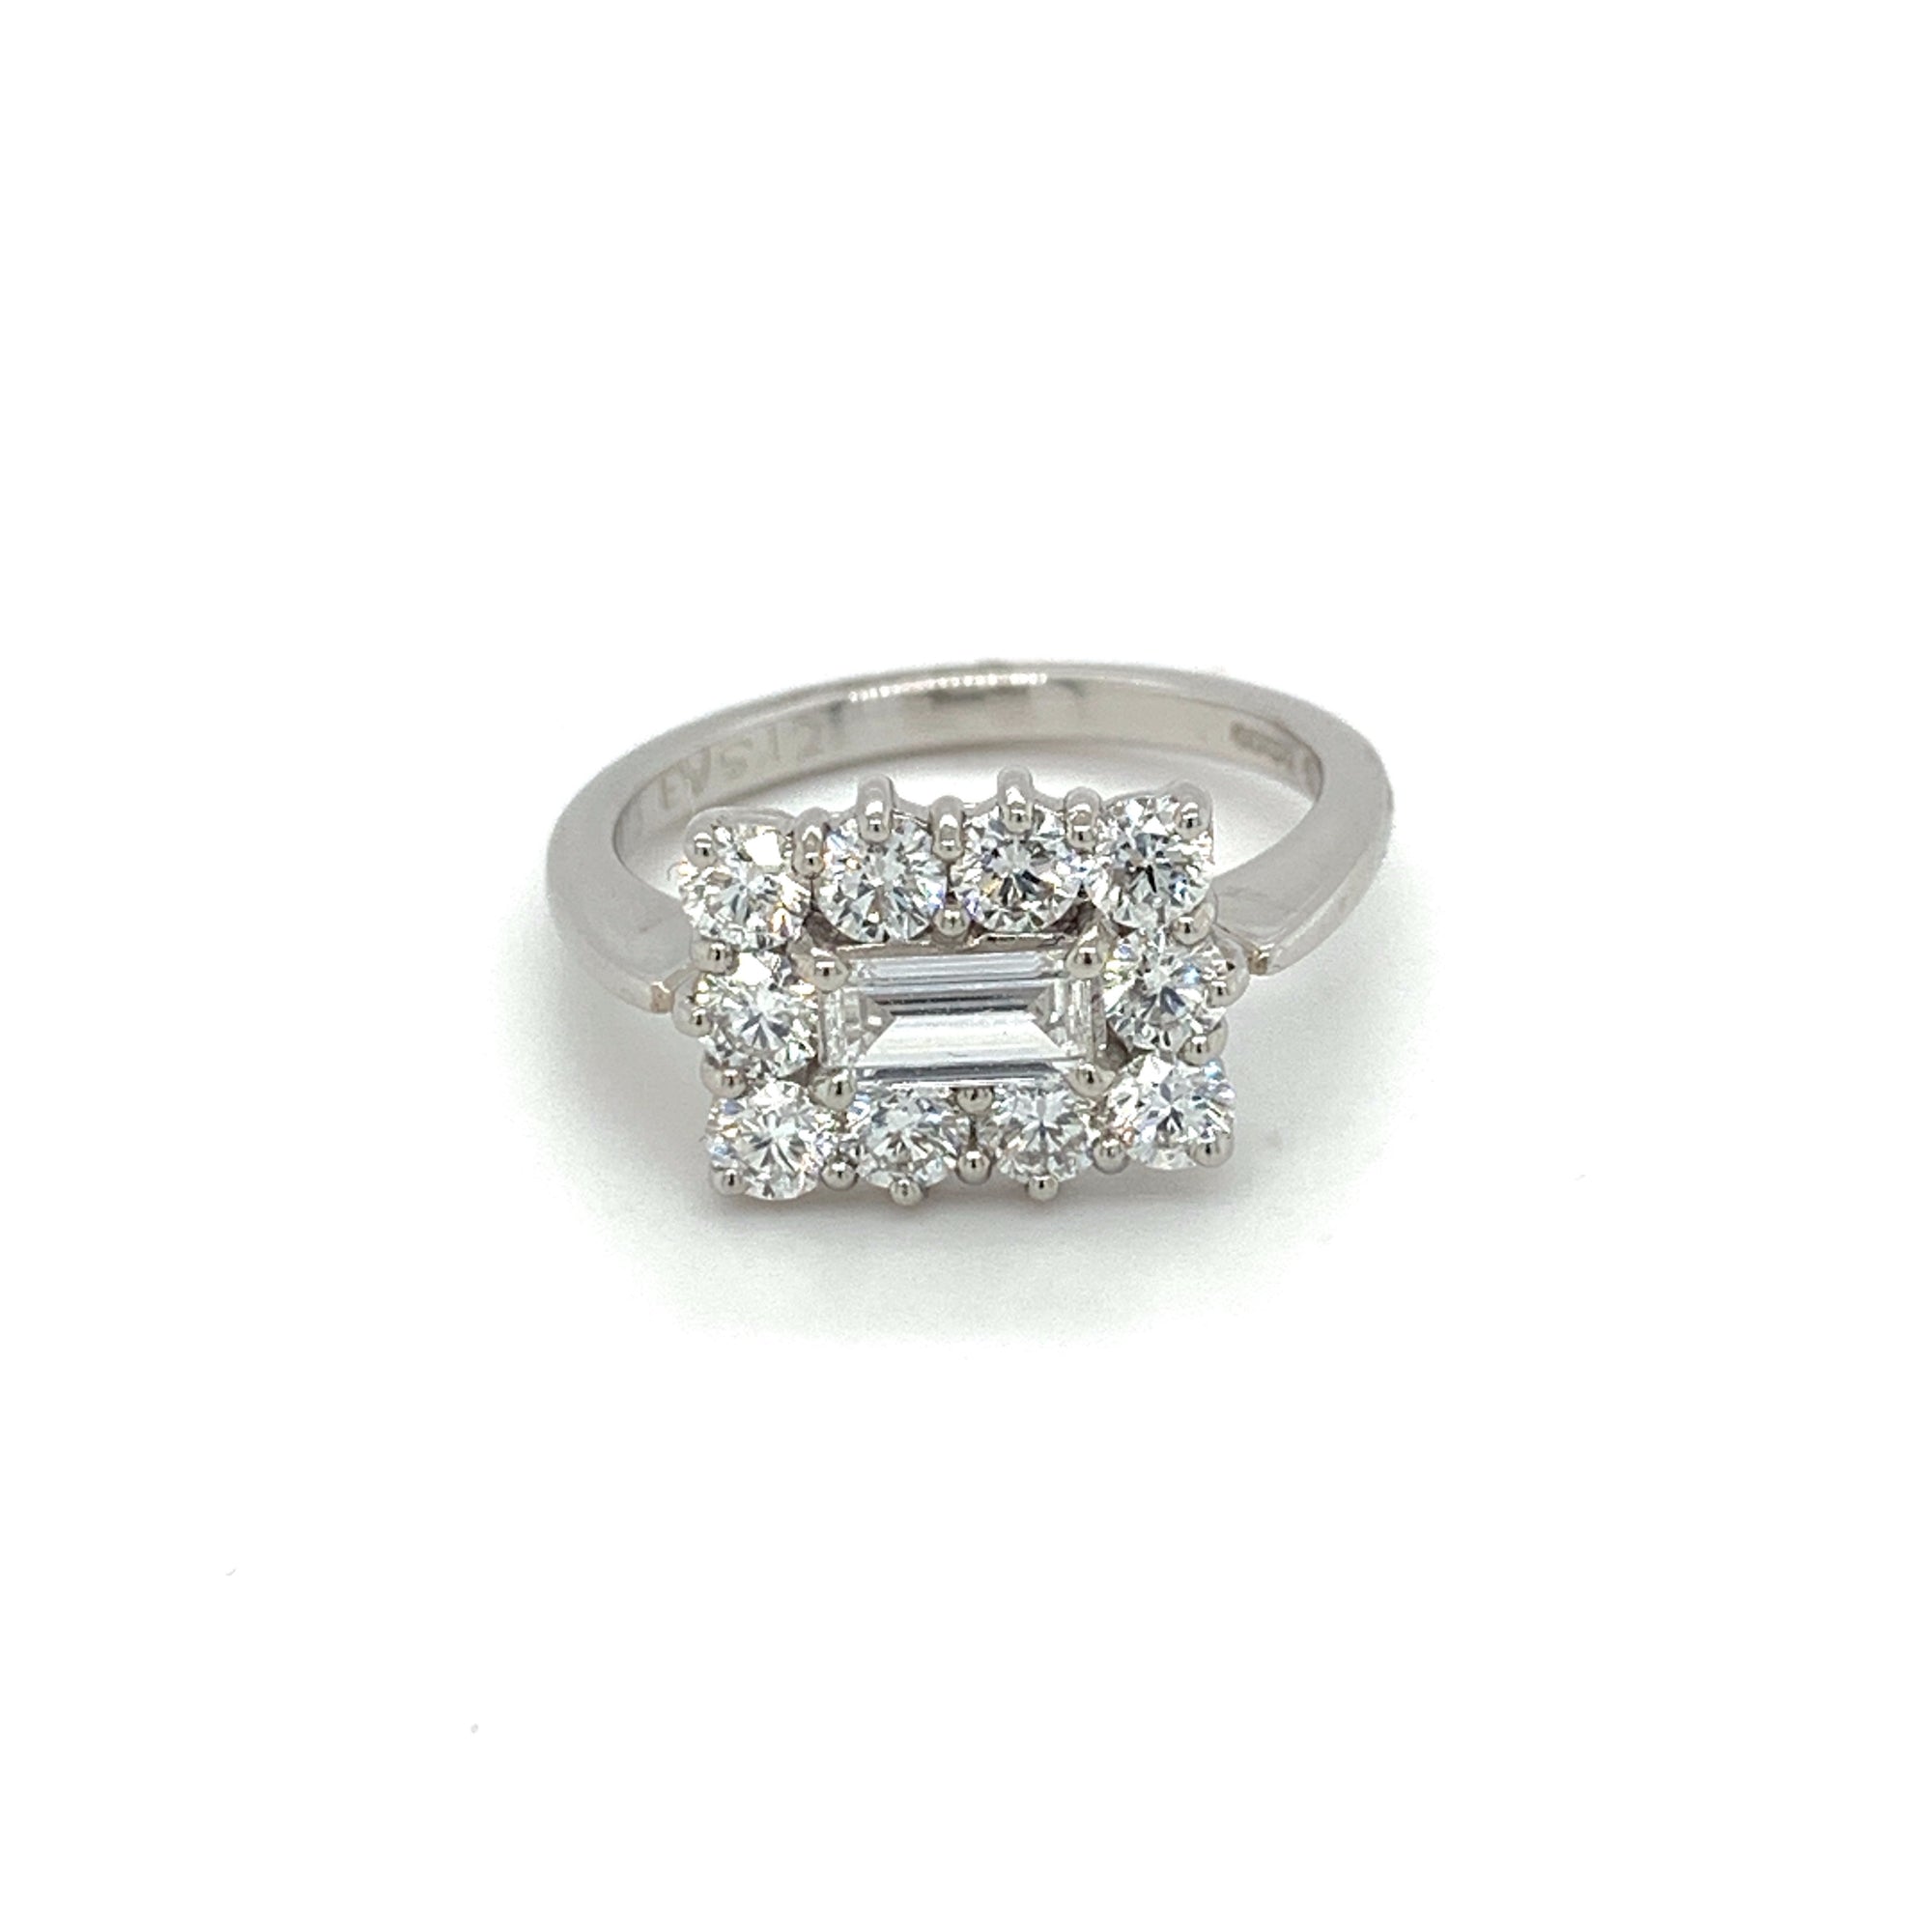 1.53ct diamond cluster ring, platinum, G/H colour, SI clarity